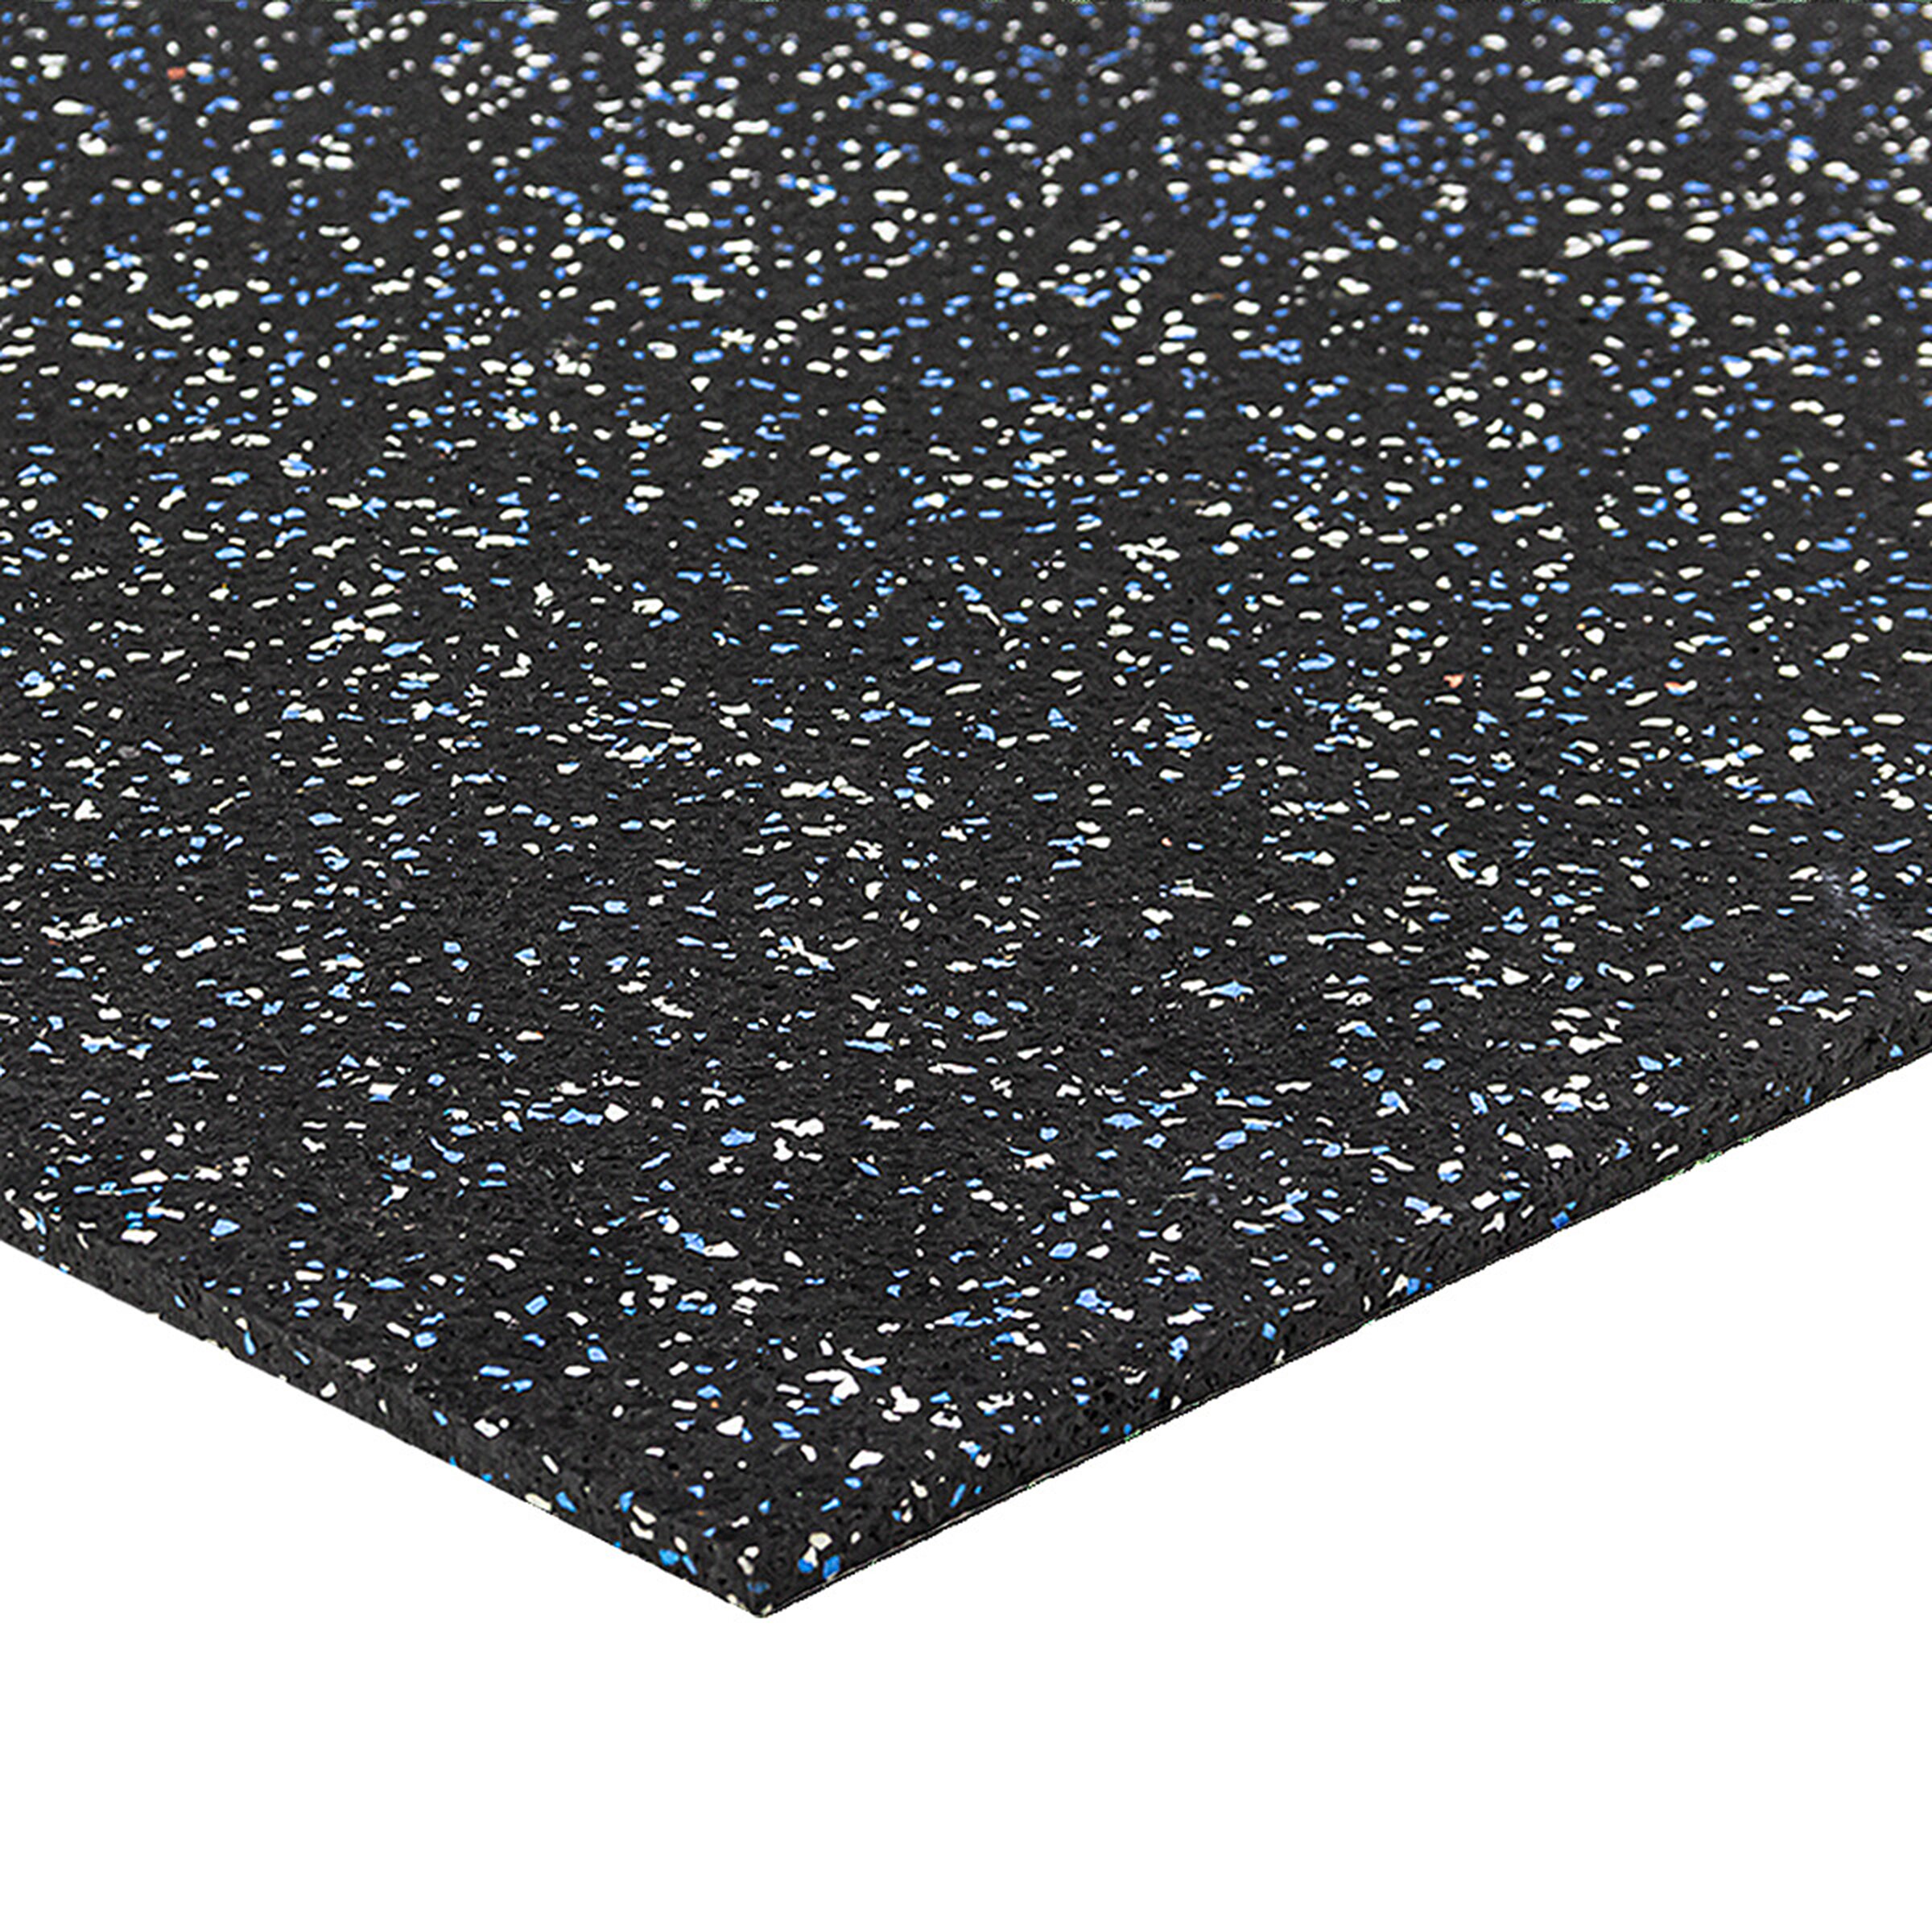 Černo-bílo-modrá podlahová guma (puzzle - střed) FLOMA FitFlo SF1050 - délka 50 cm, šířka 50 cm, výška 0,8 cm